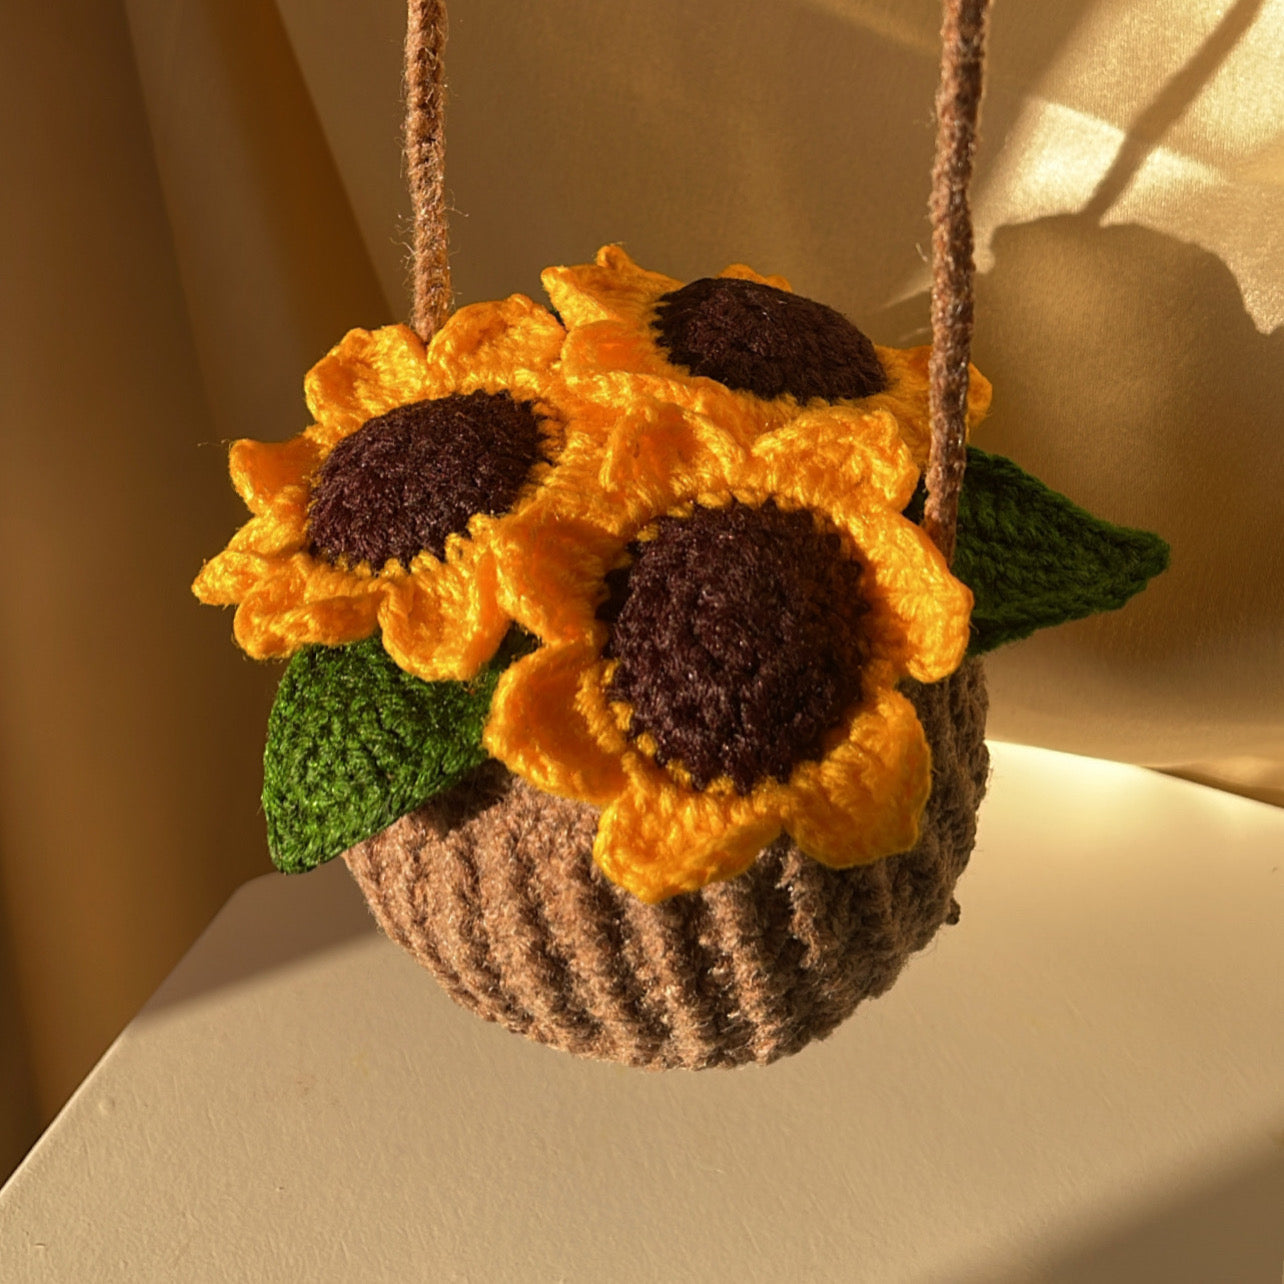 Sunflower mini car hanging basket - Crochet flowers - Ladywithcraft